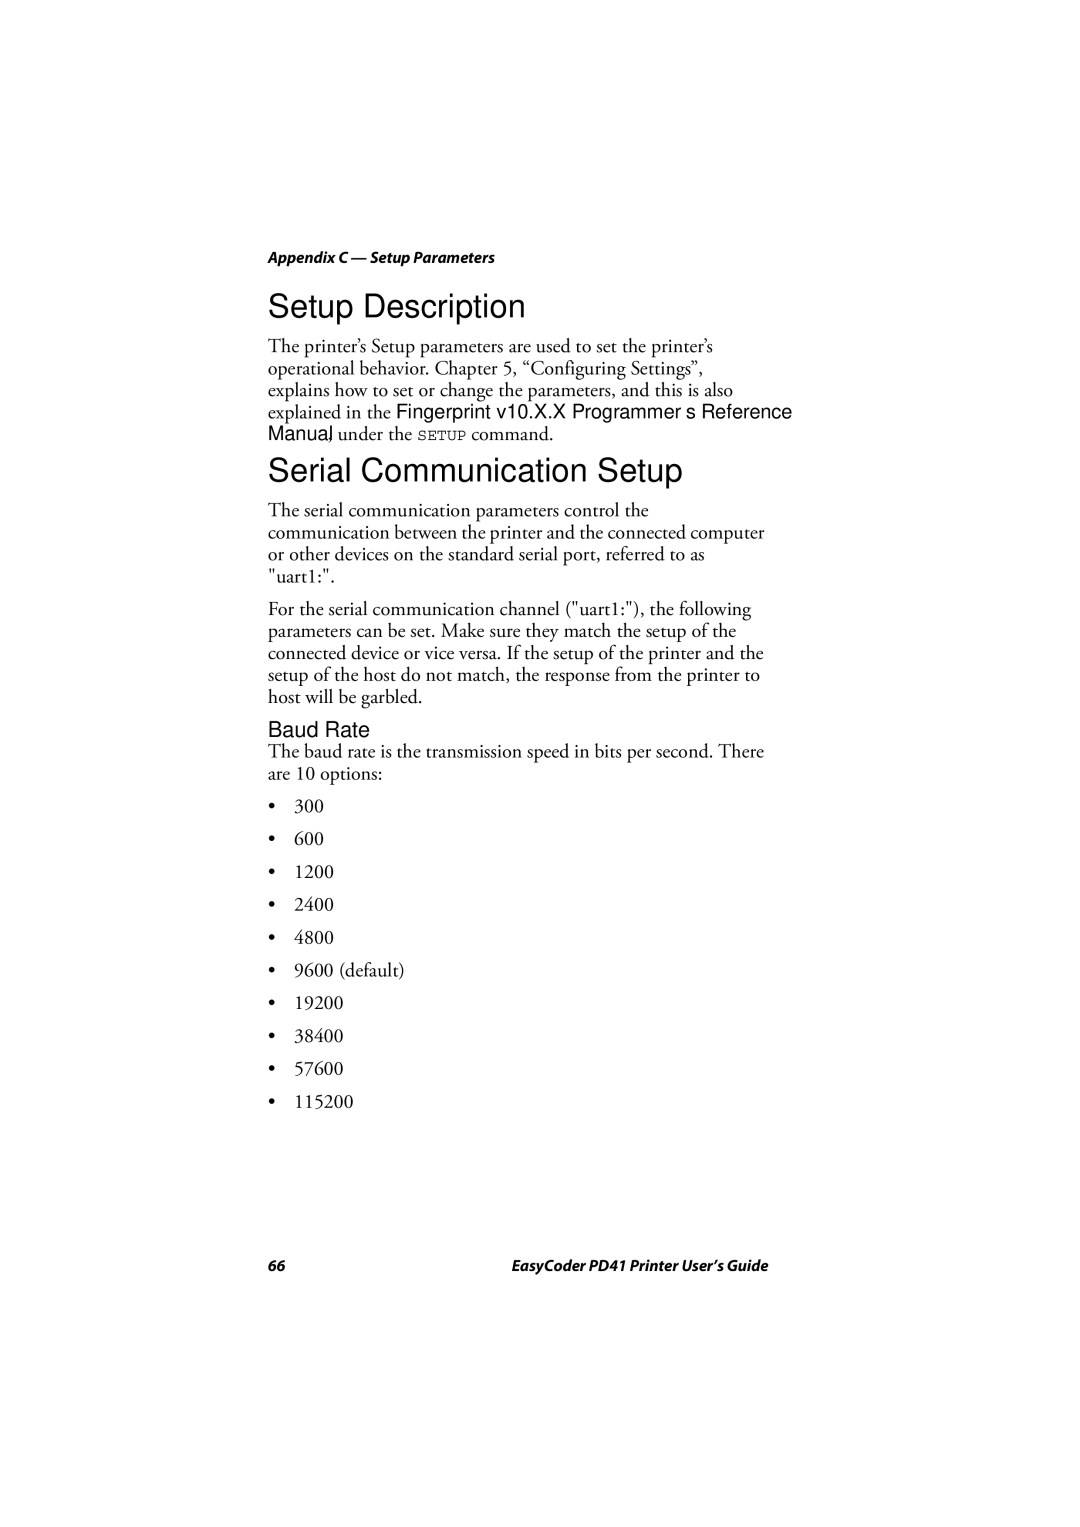 Intermec PD41 manual Setup Description, Serial Communication Setup, Baud Rate 